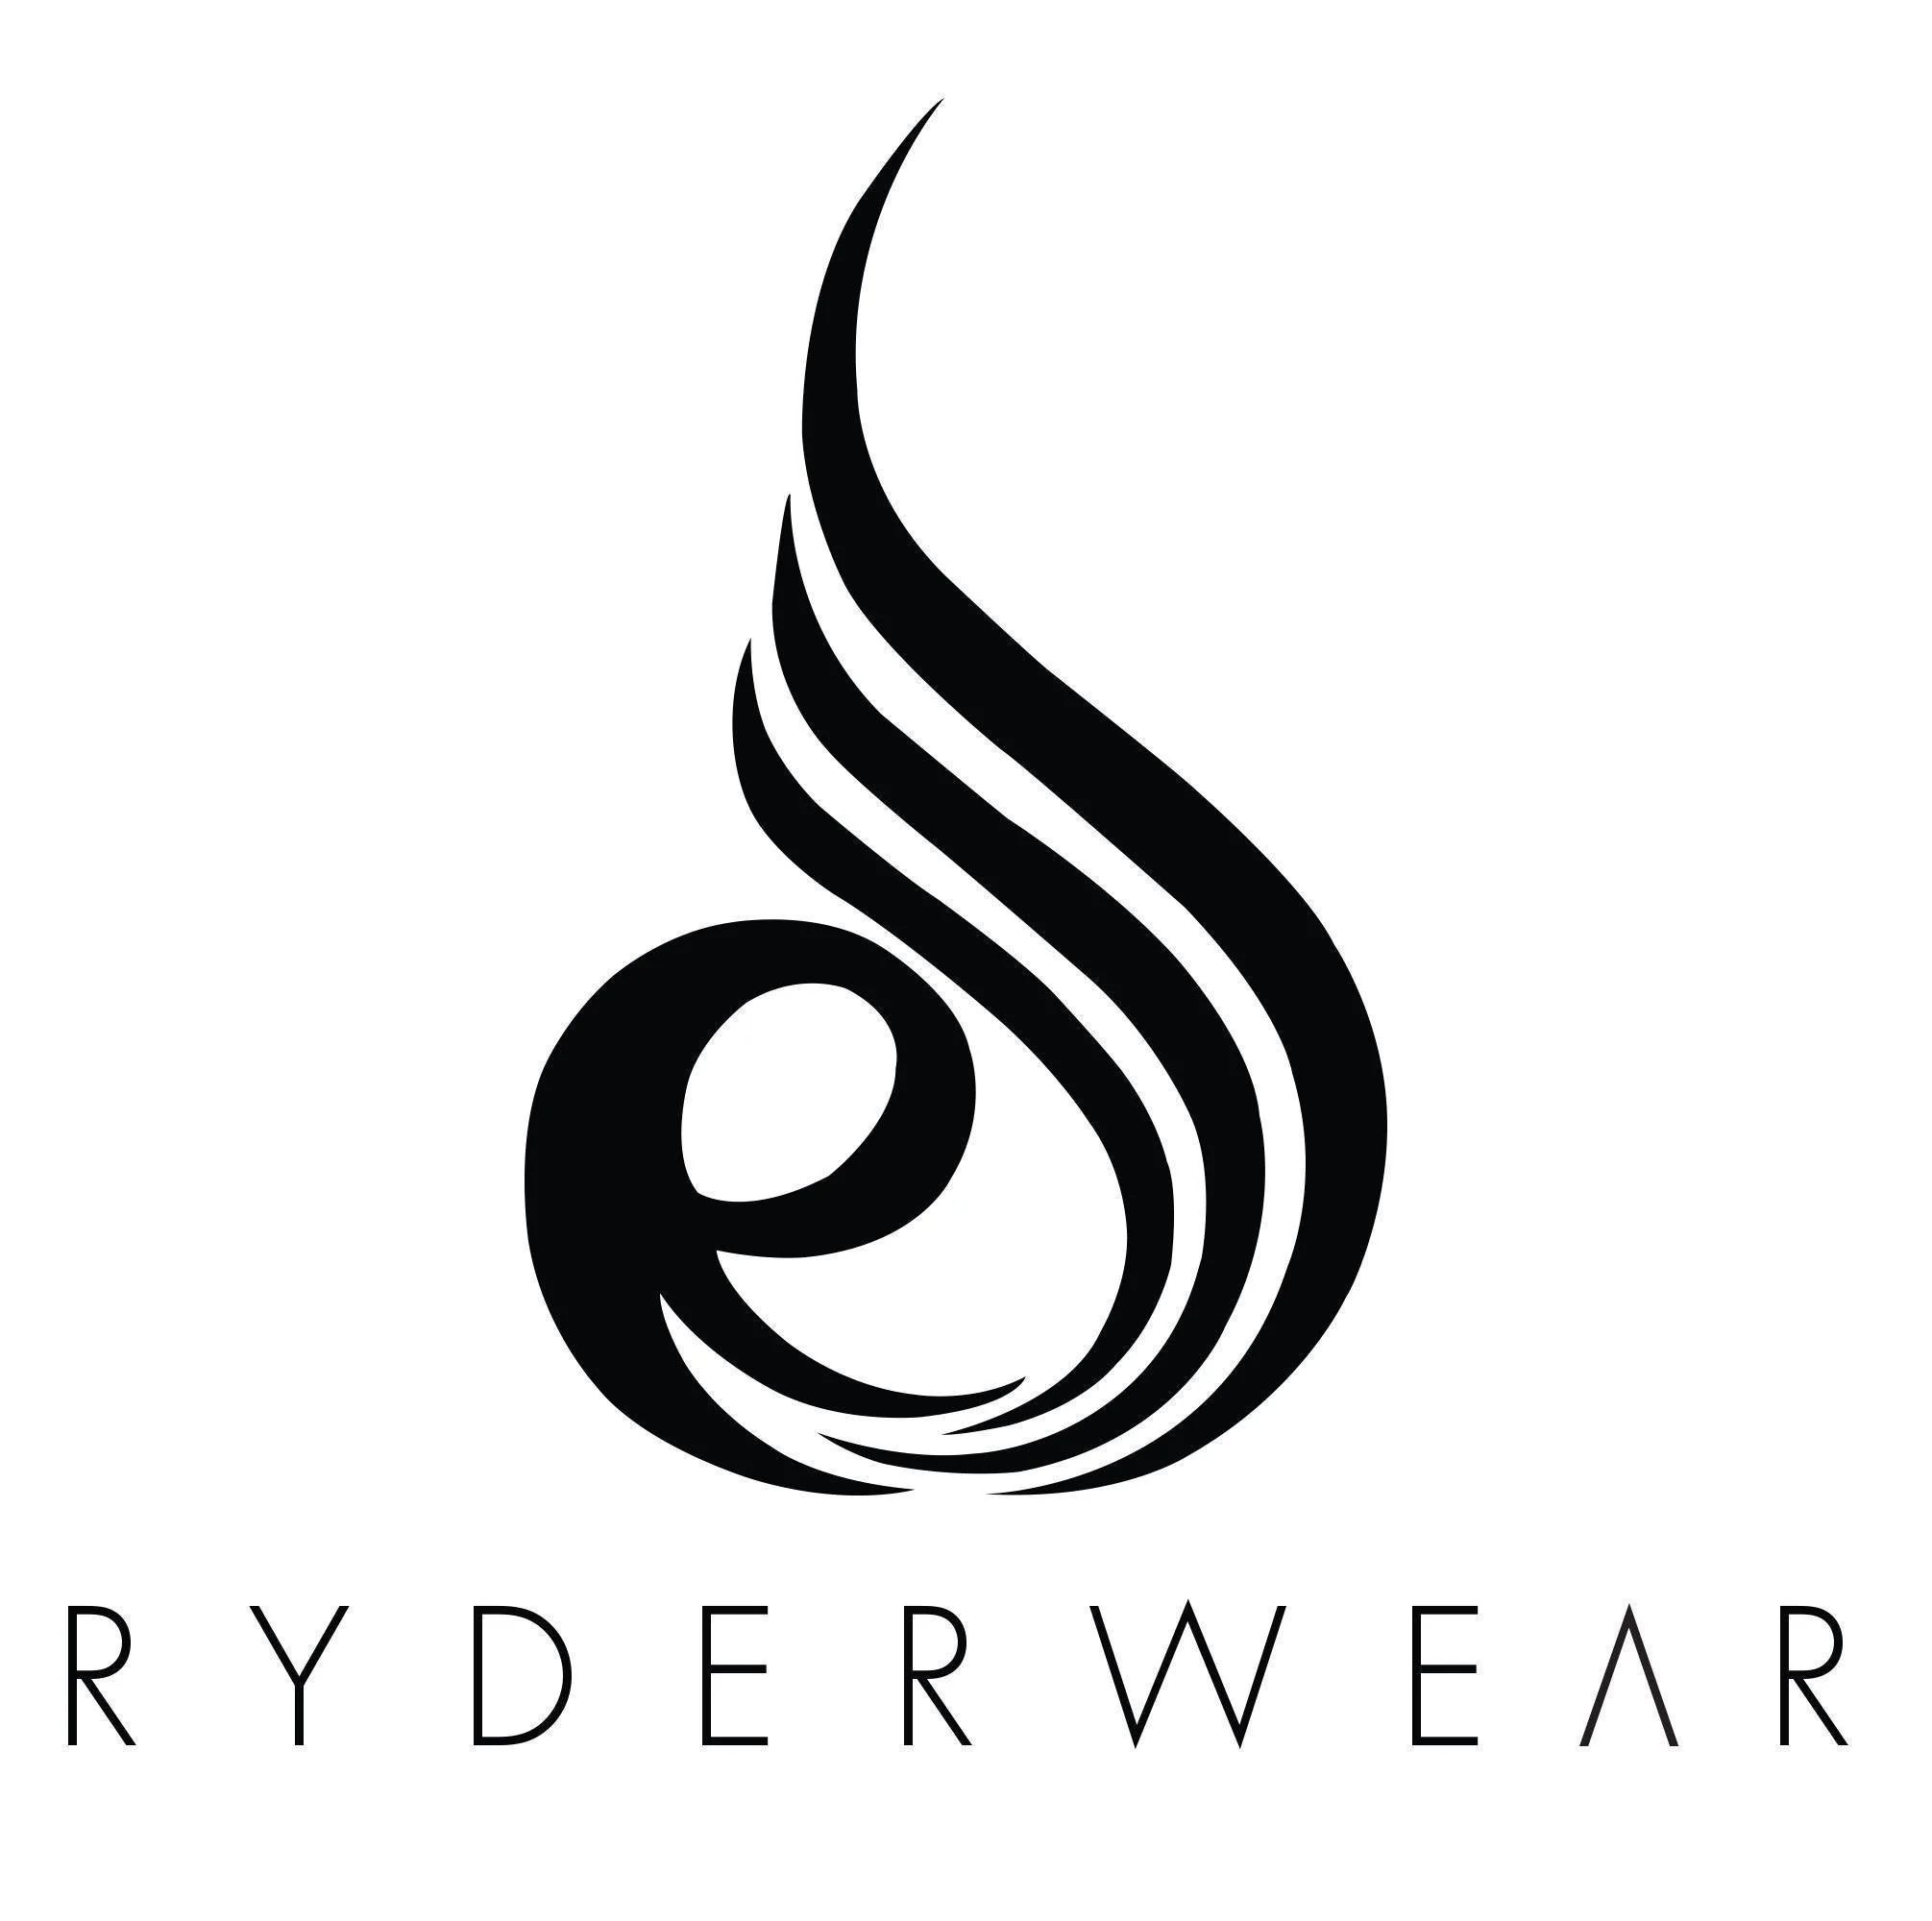 Ryder wear